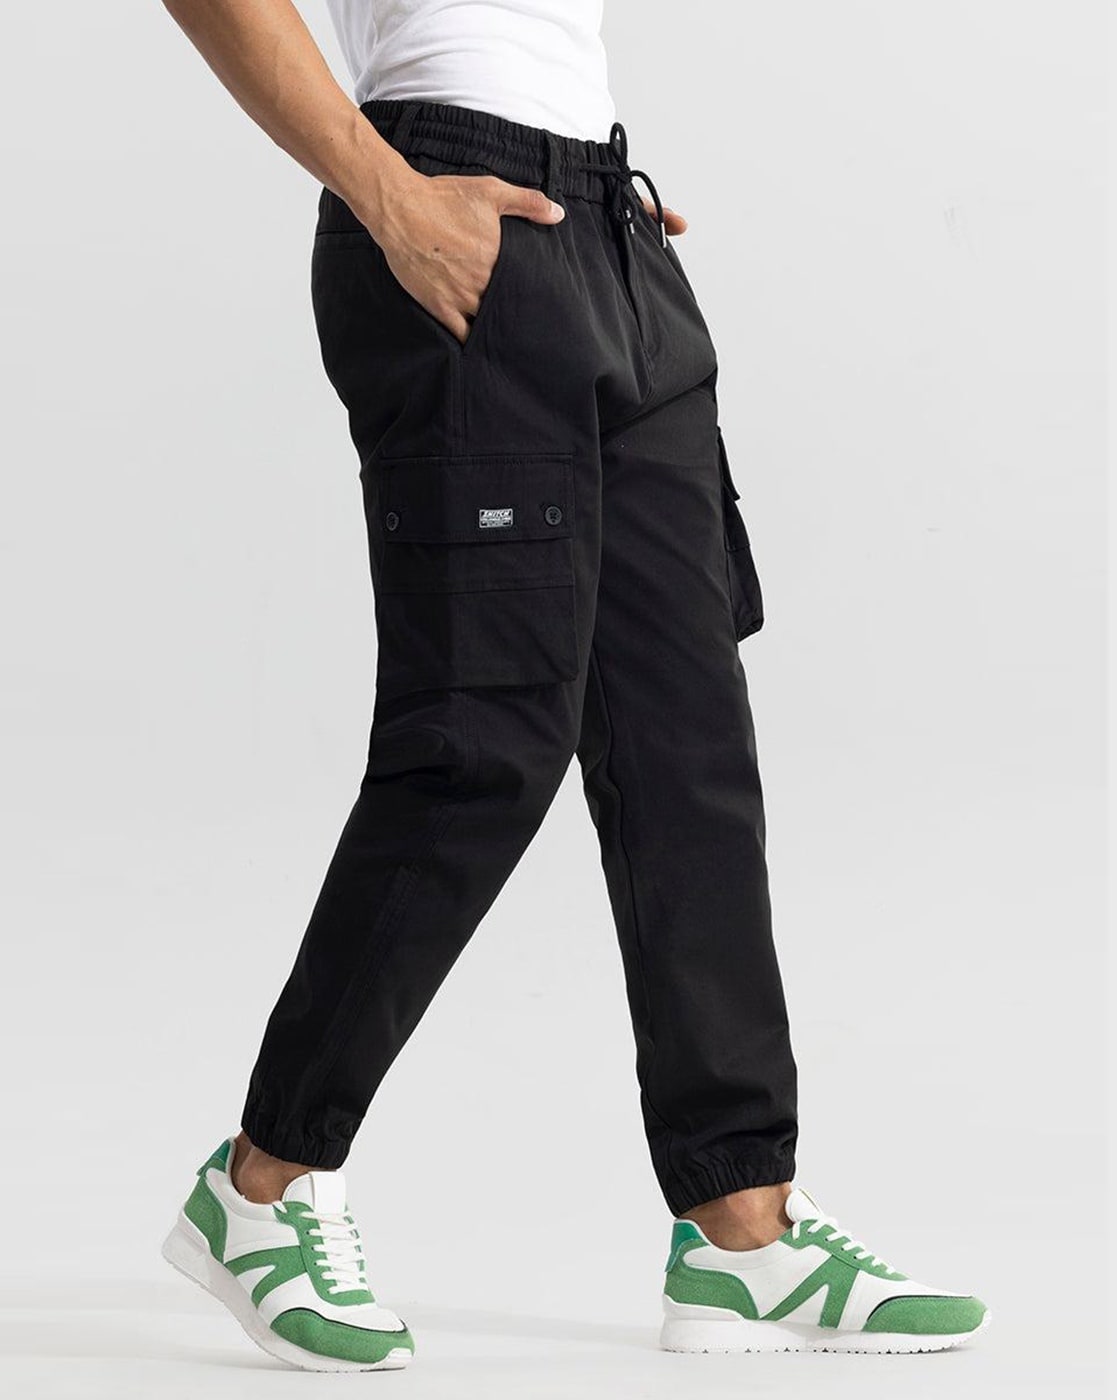 XFLWAM Men's Athletic-Fit Cargo Pants Casual Regular Straight Stretch Twill Pant  Black L - Walmart.com